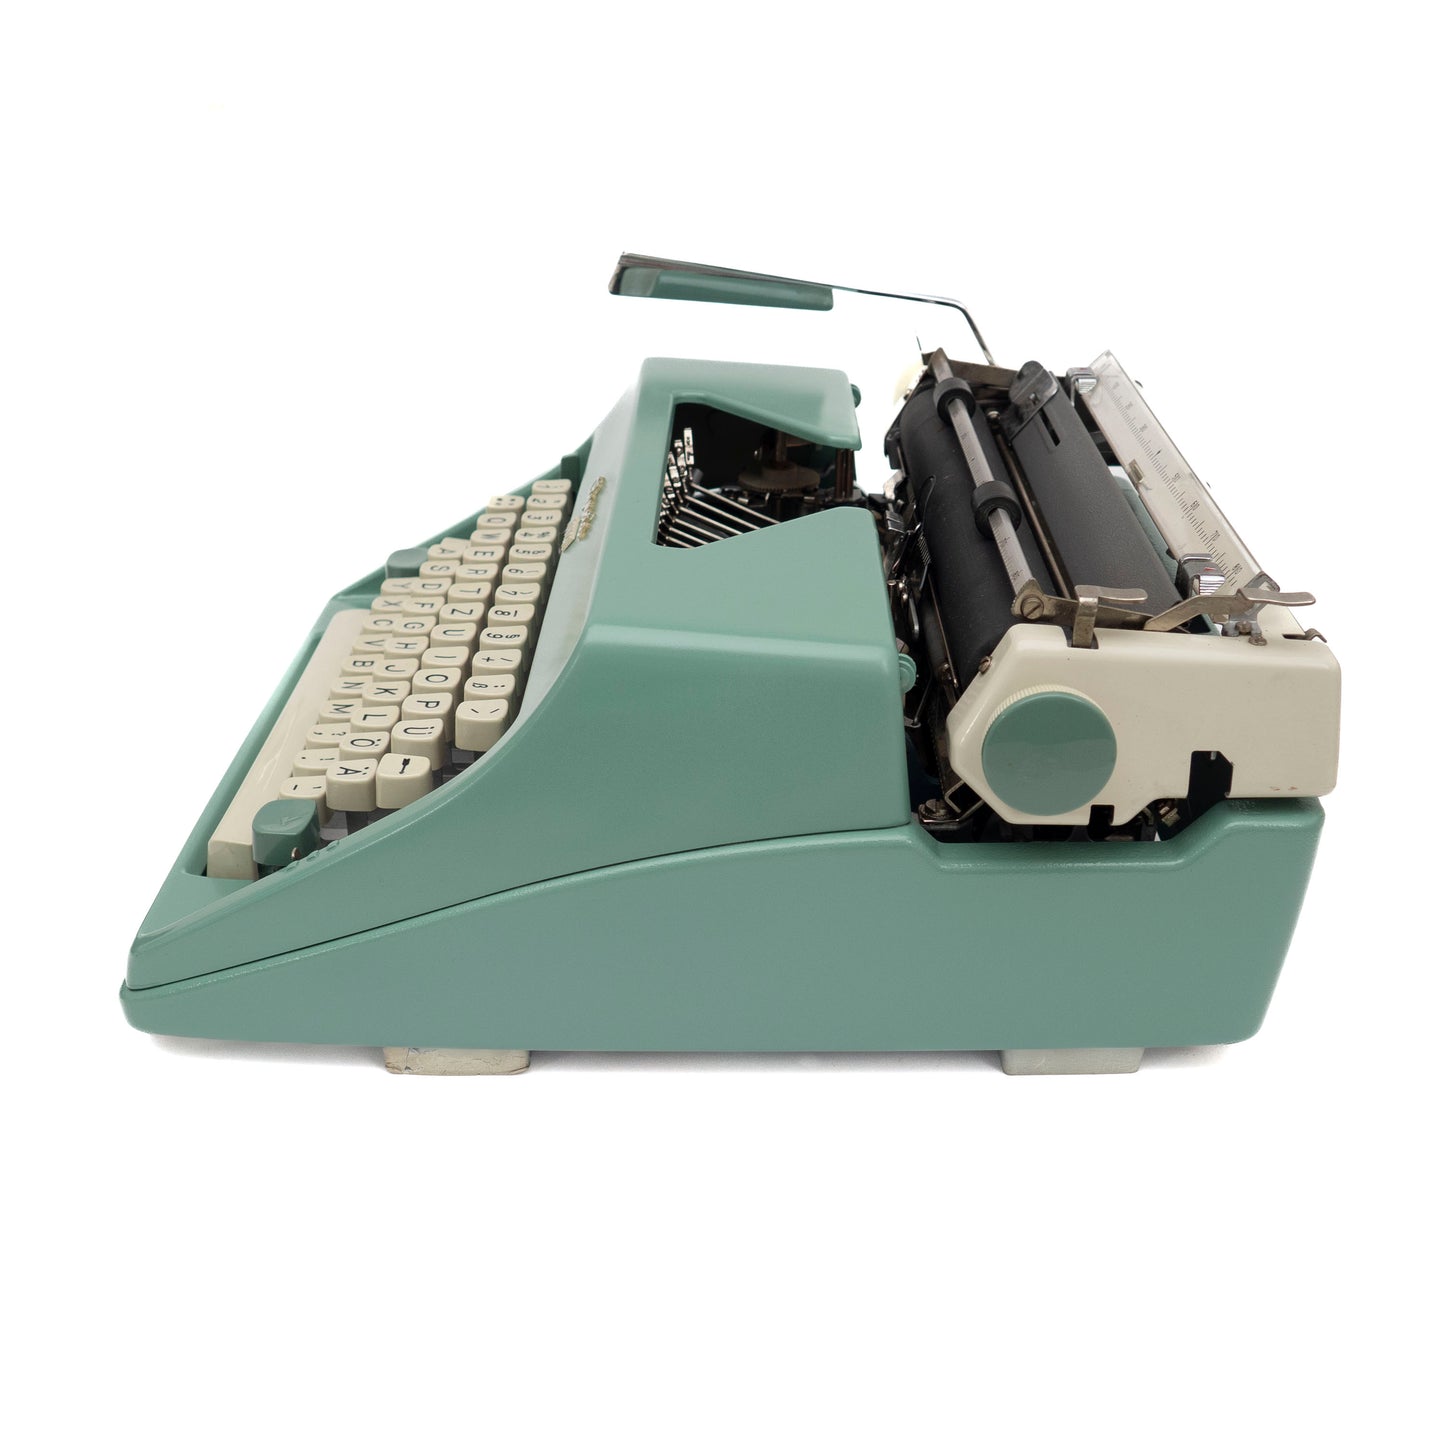 Green Typewriter Olympia Monica